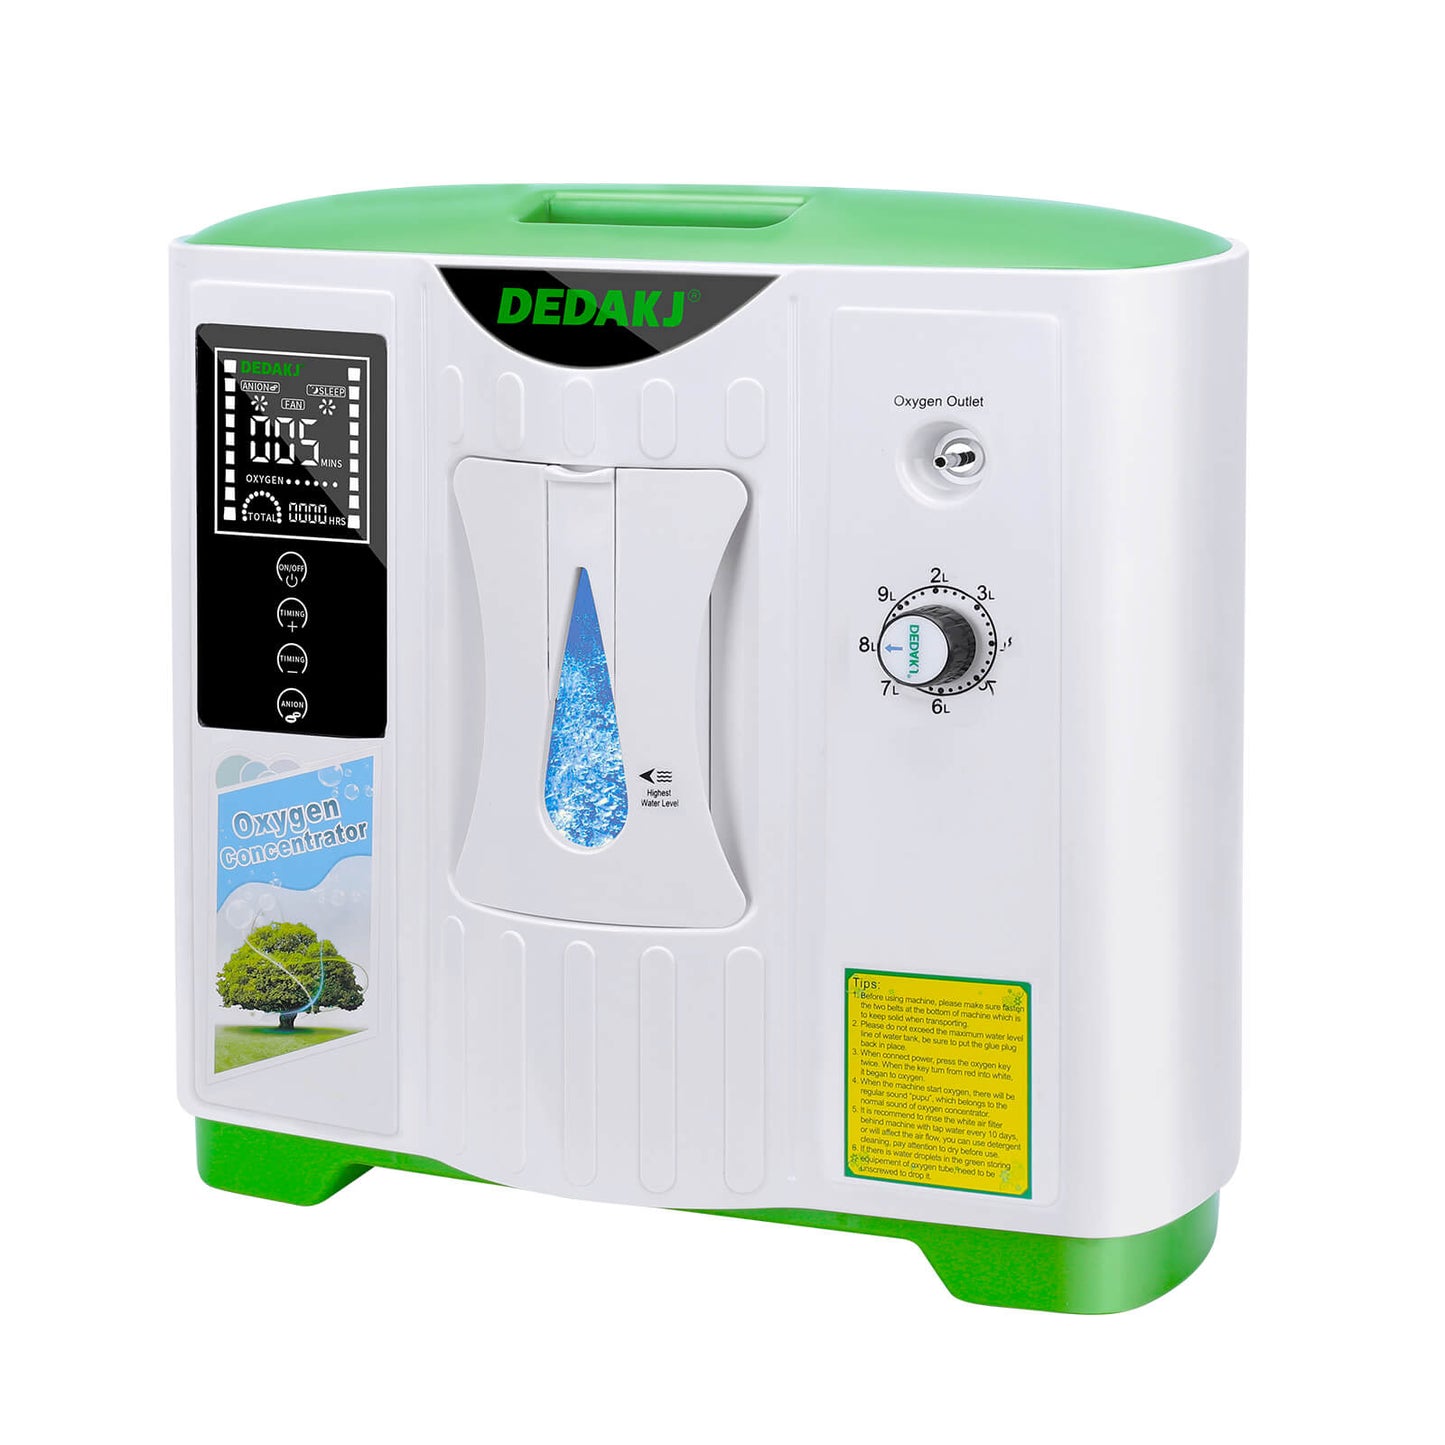 DEDAKJ 9 LPM Powerful Home Oxygen Concentrator 93% High Purity Portable Continuous Flow Rate Travel Oxygen Concentrator DE-2A